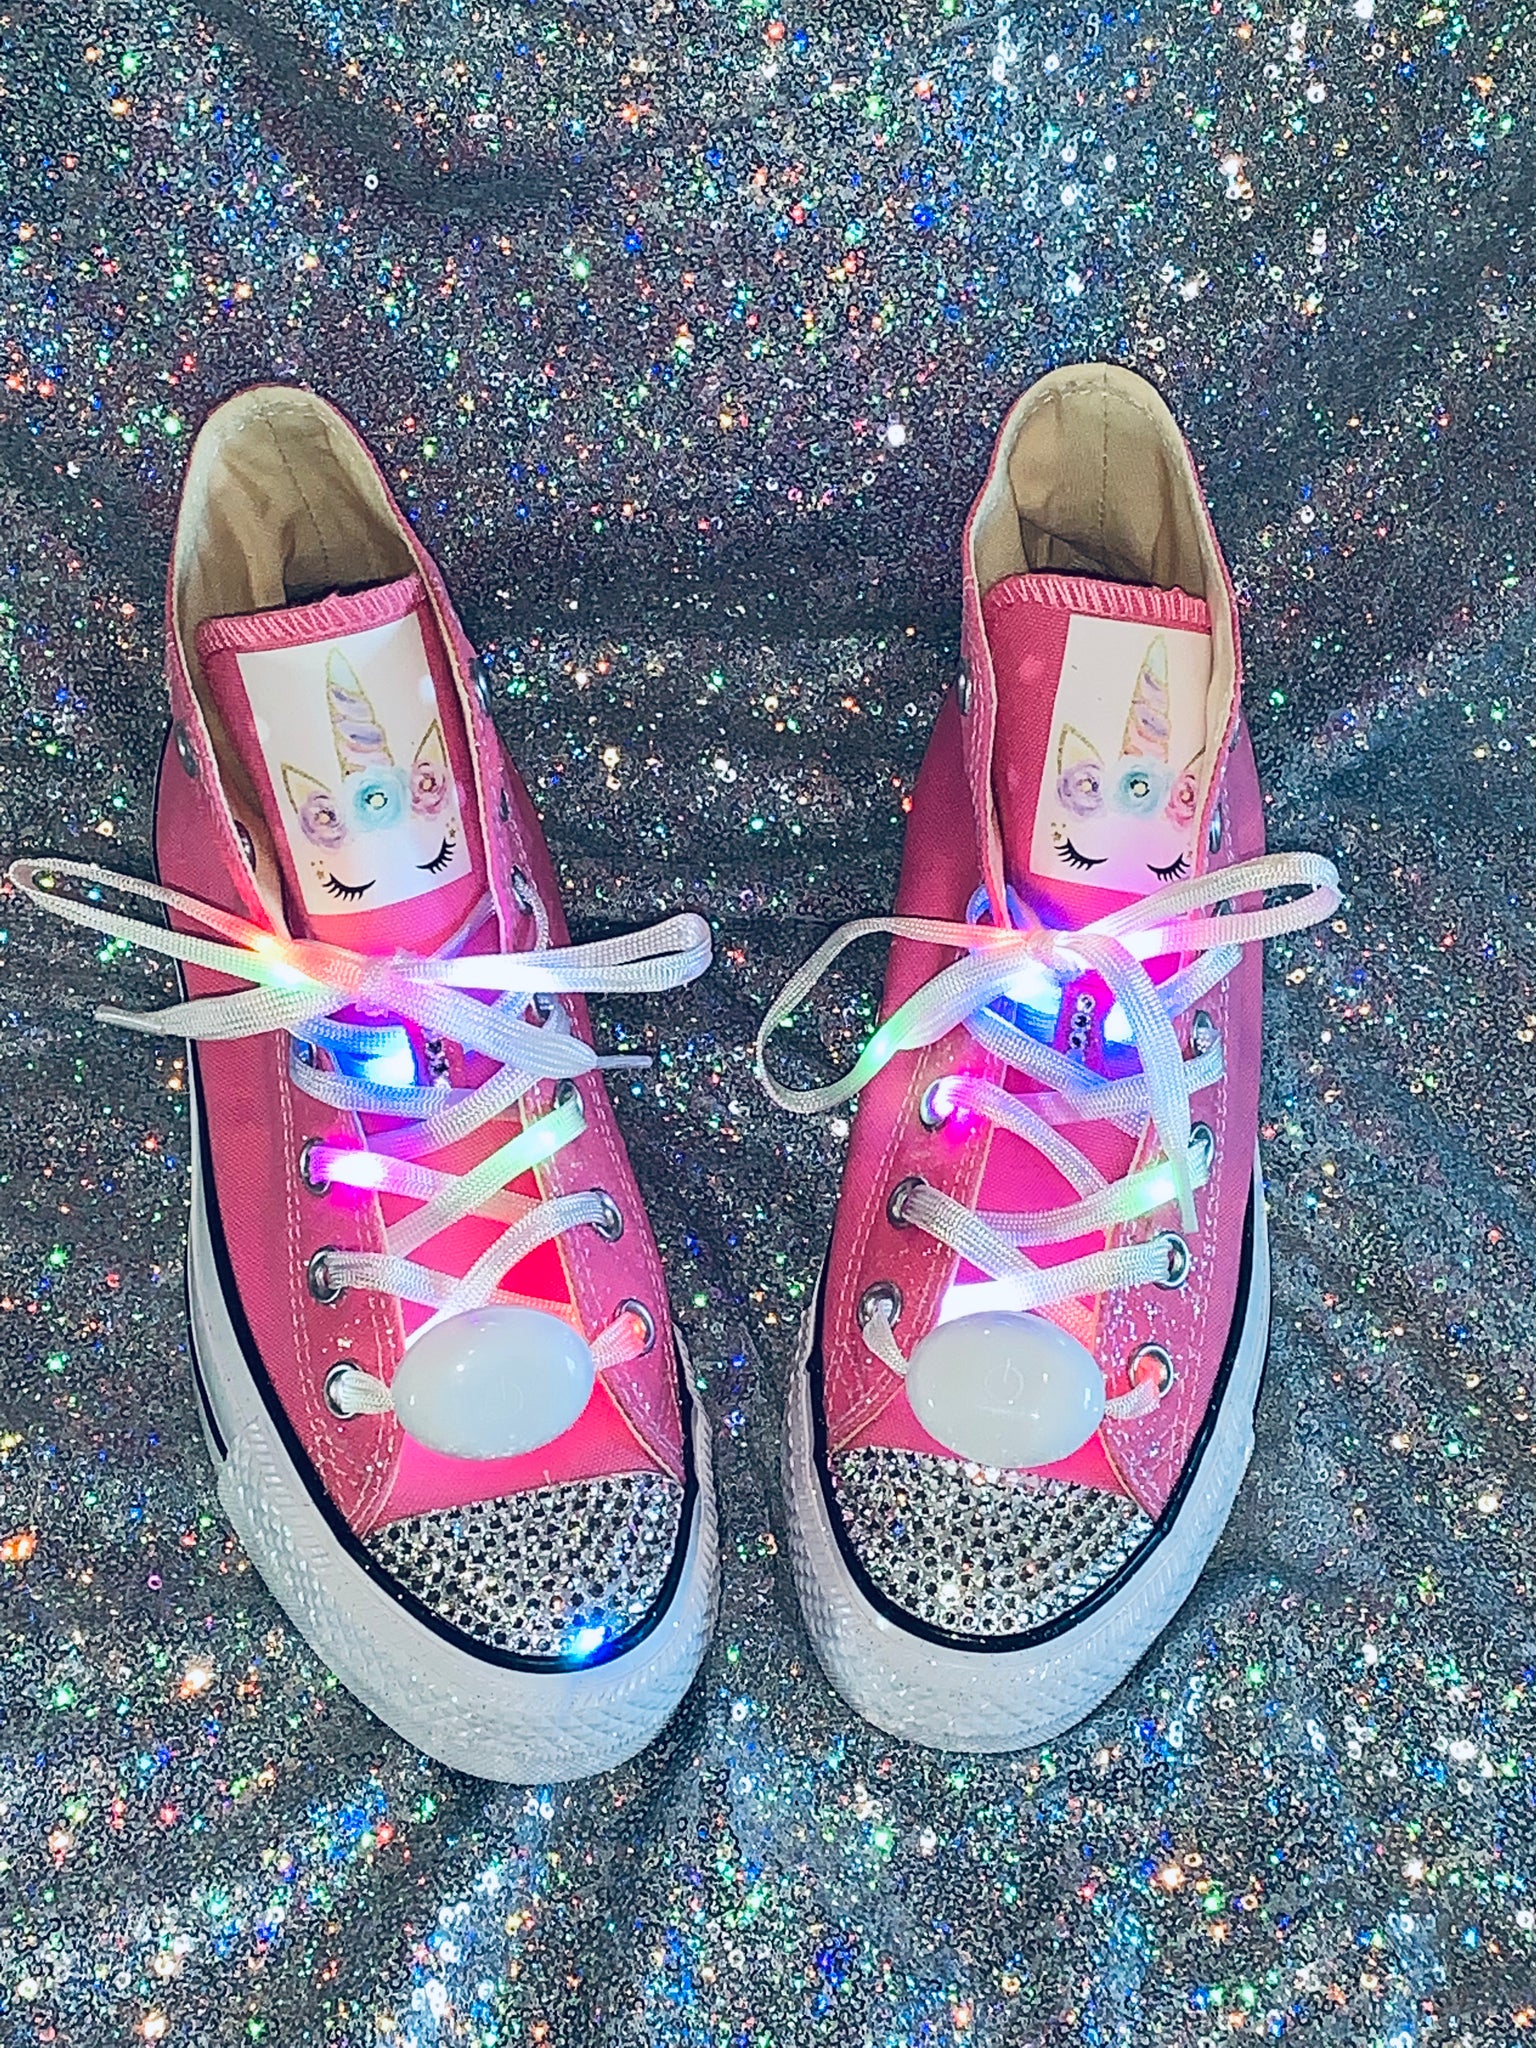 converse light up shoes